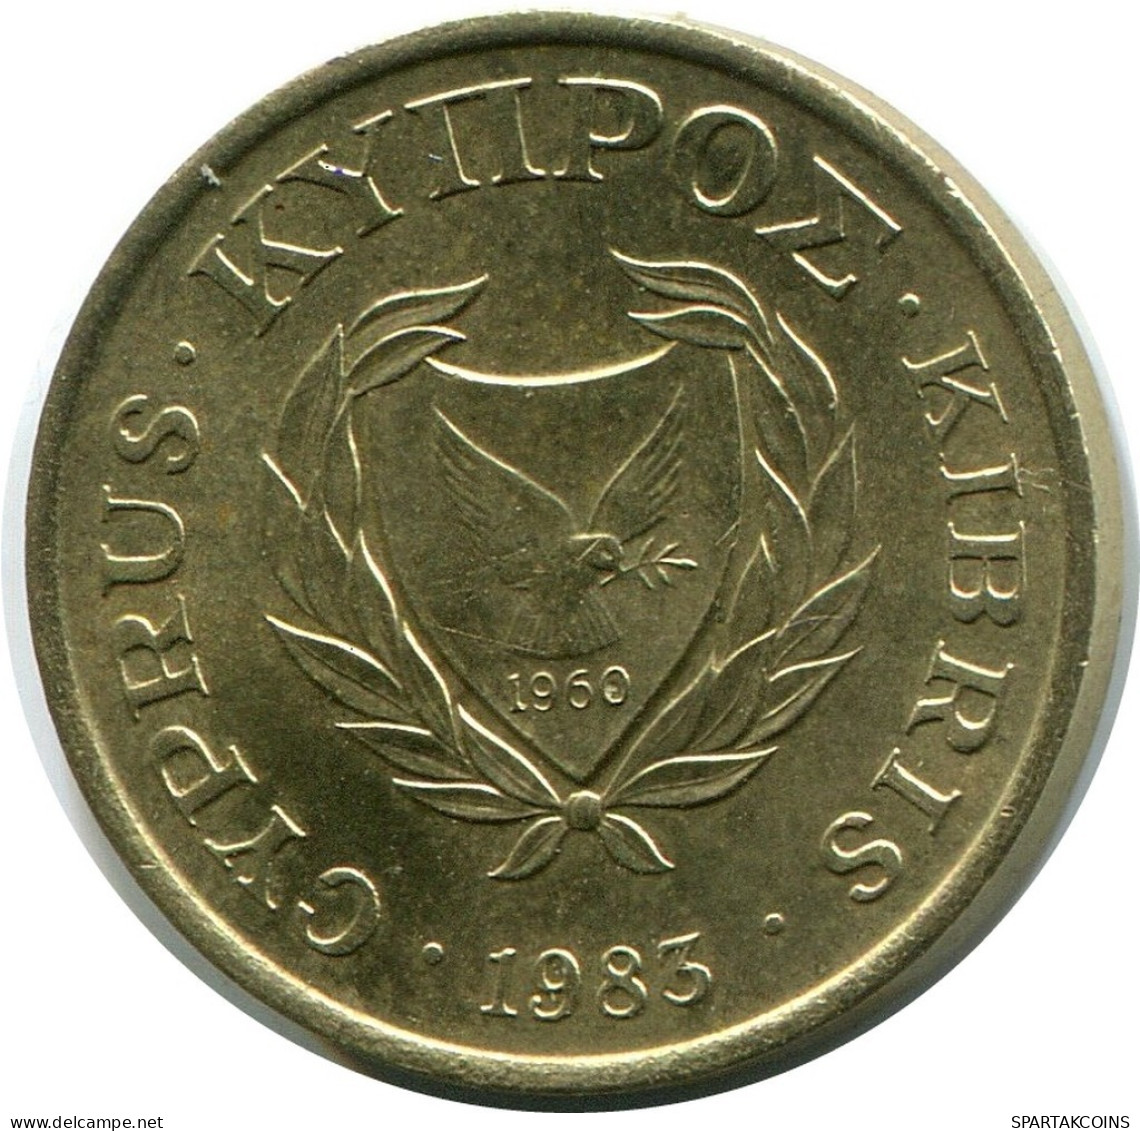 1 CENTS 1983 ZYPERN CYPRUS Münze #AP328.D.A - Cyprus